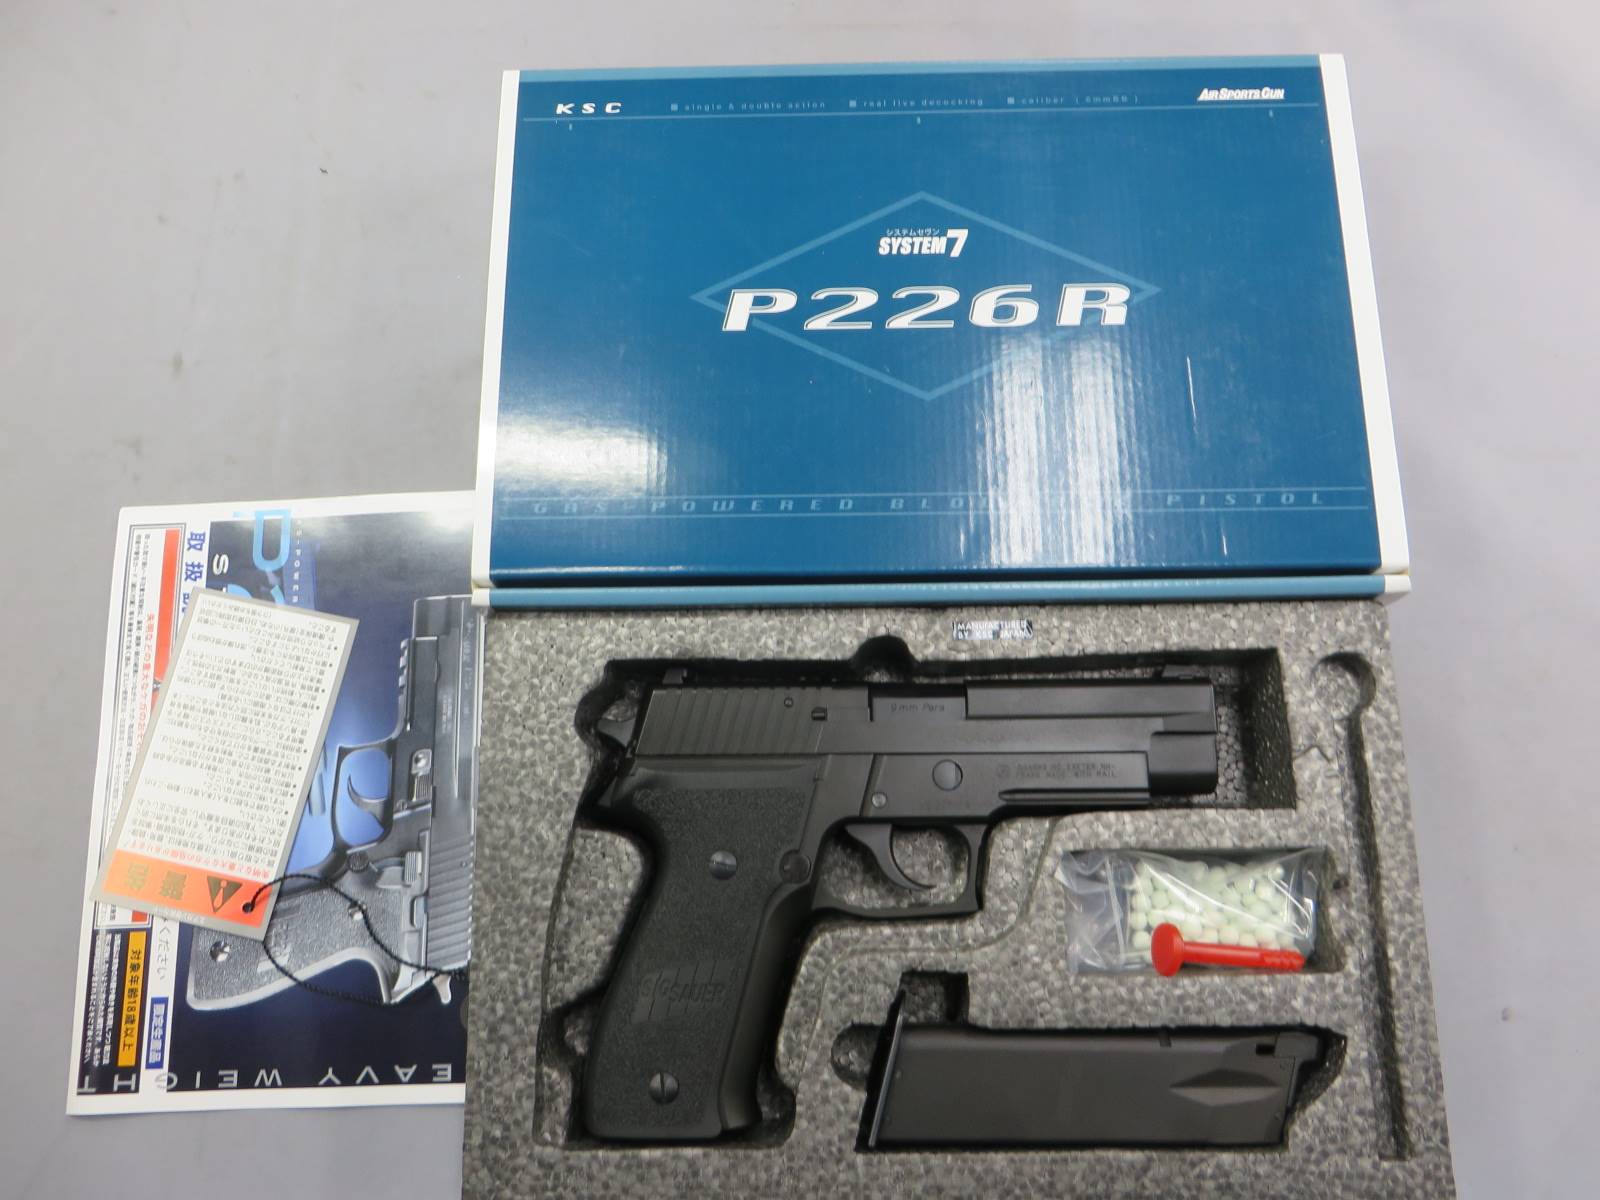 【KSC】P226R スタンダード HW SYSTEM7